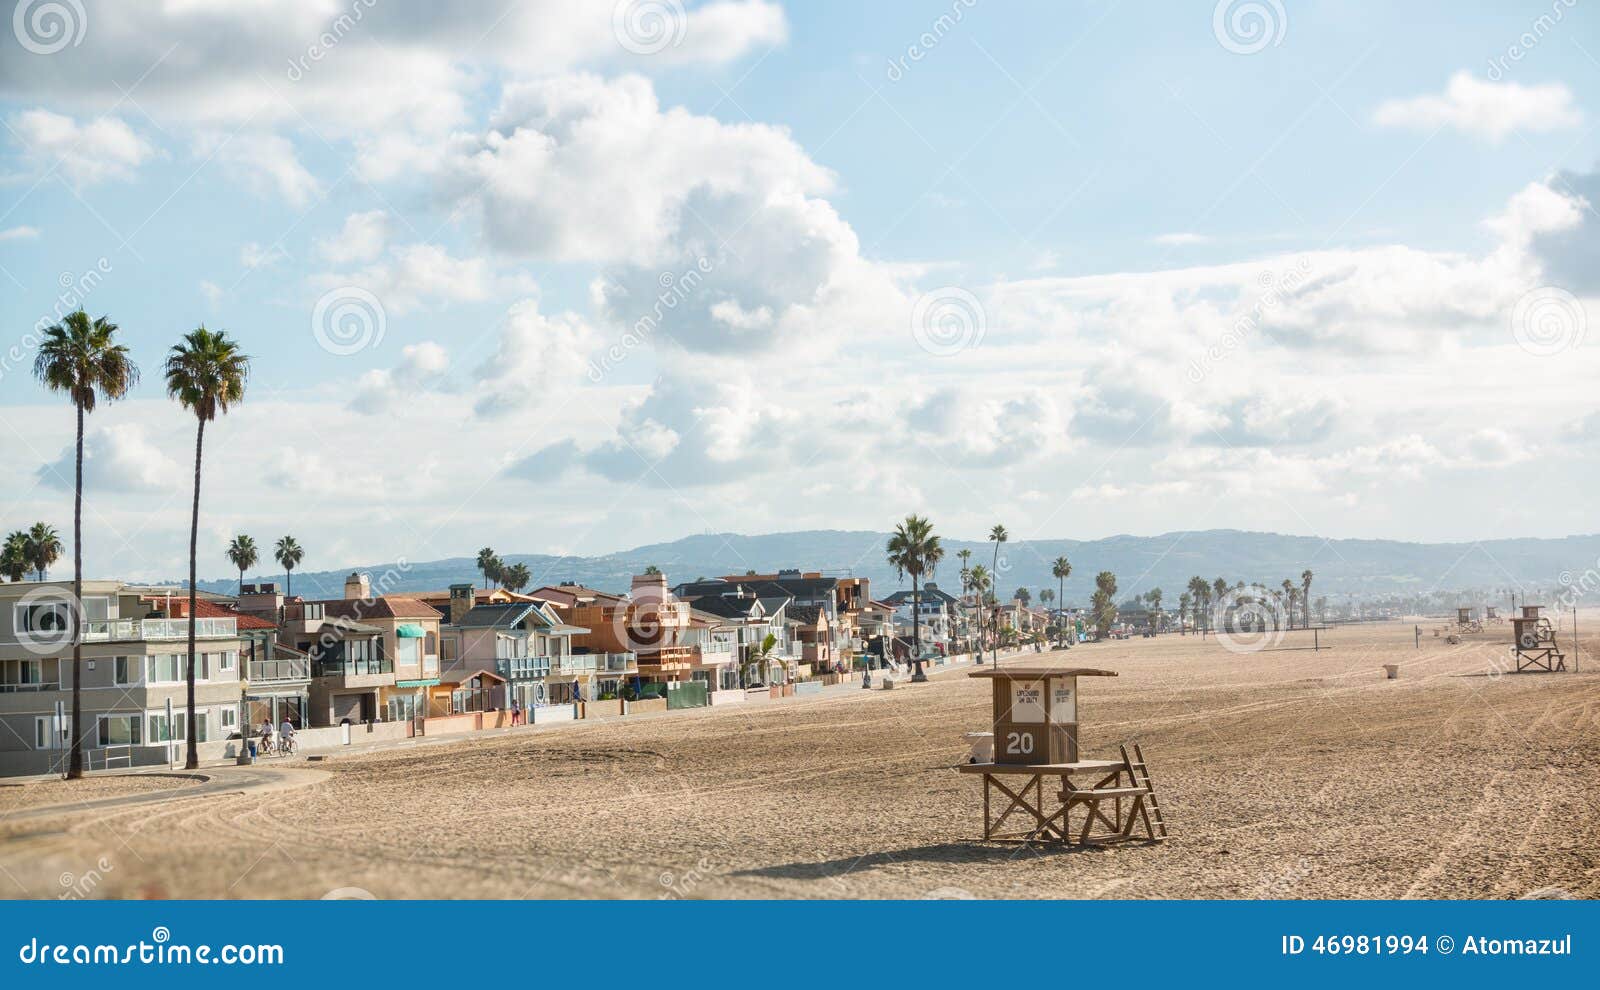 newport beach california 1